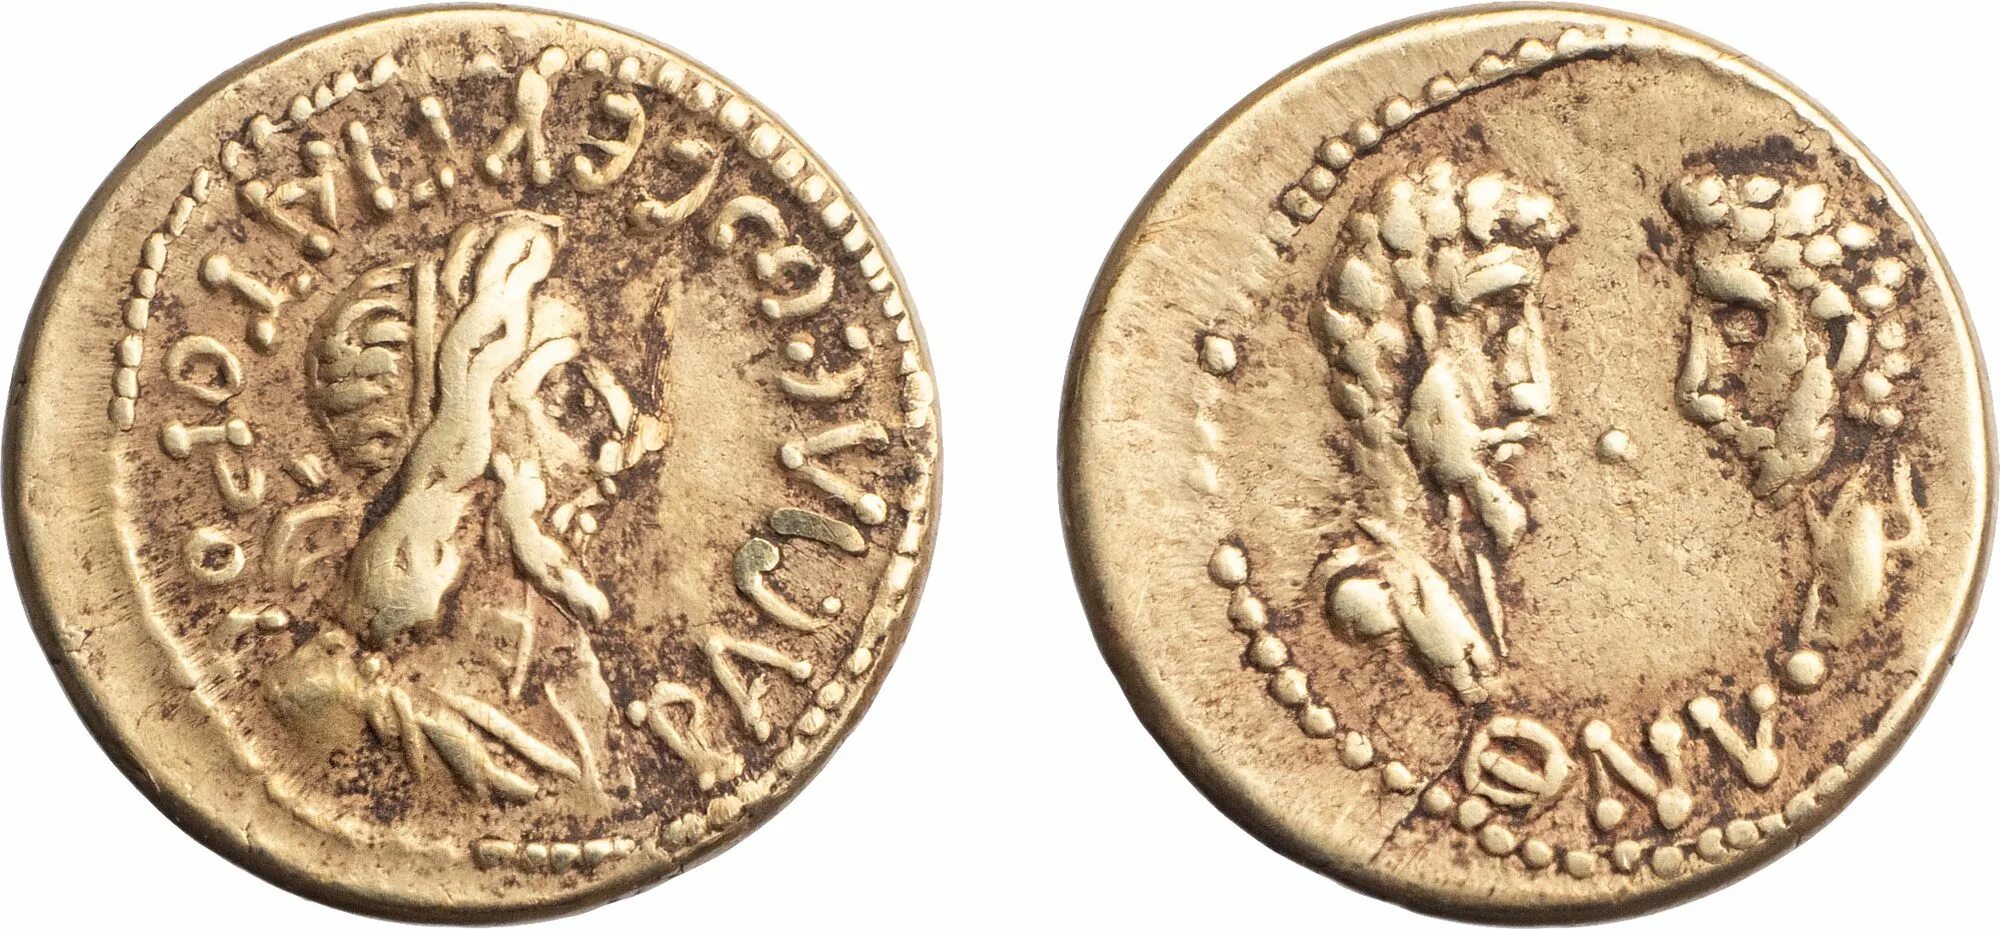 154 170. Митридат Евпатор монета. Монеты царя Евпатора. Клейма Боспорского царства. Нумий монета.